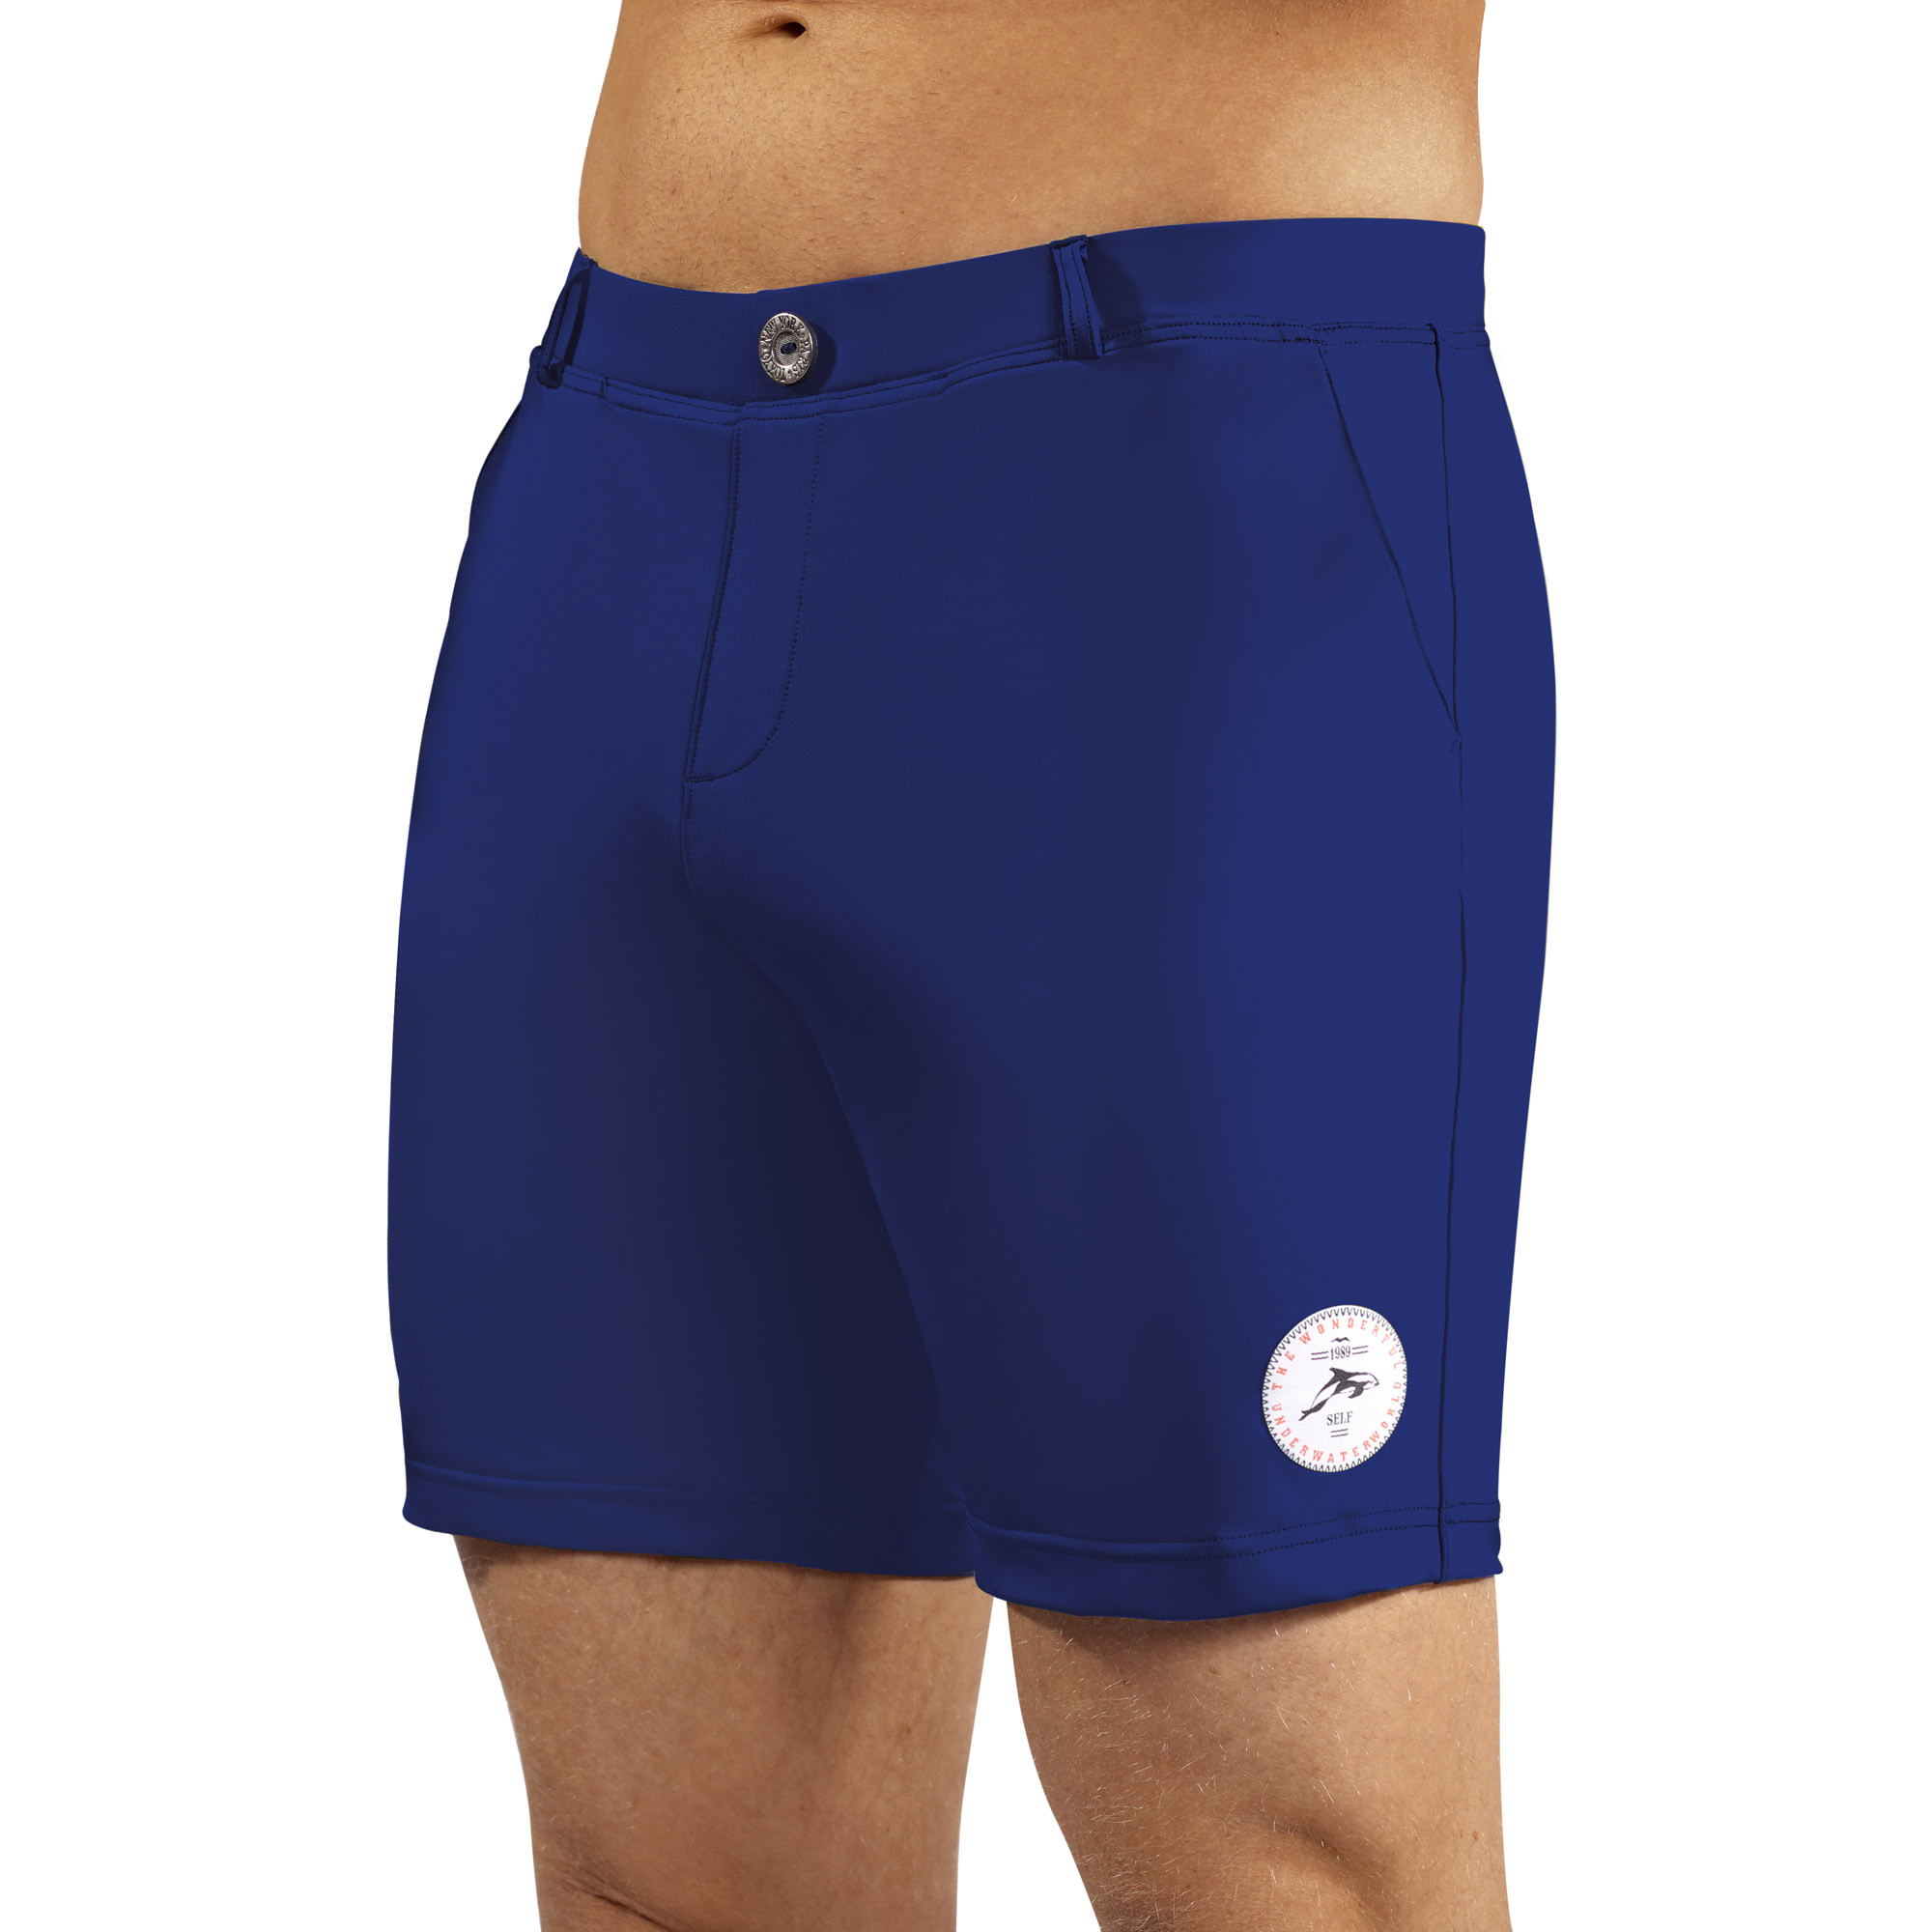 Pánské plavky Swimming shorts comfort13- kr. modré - Self XL